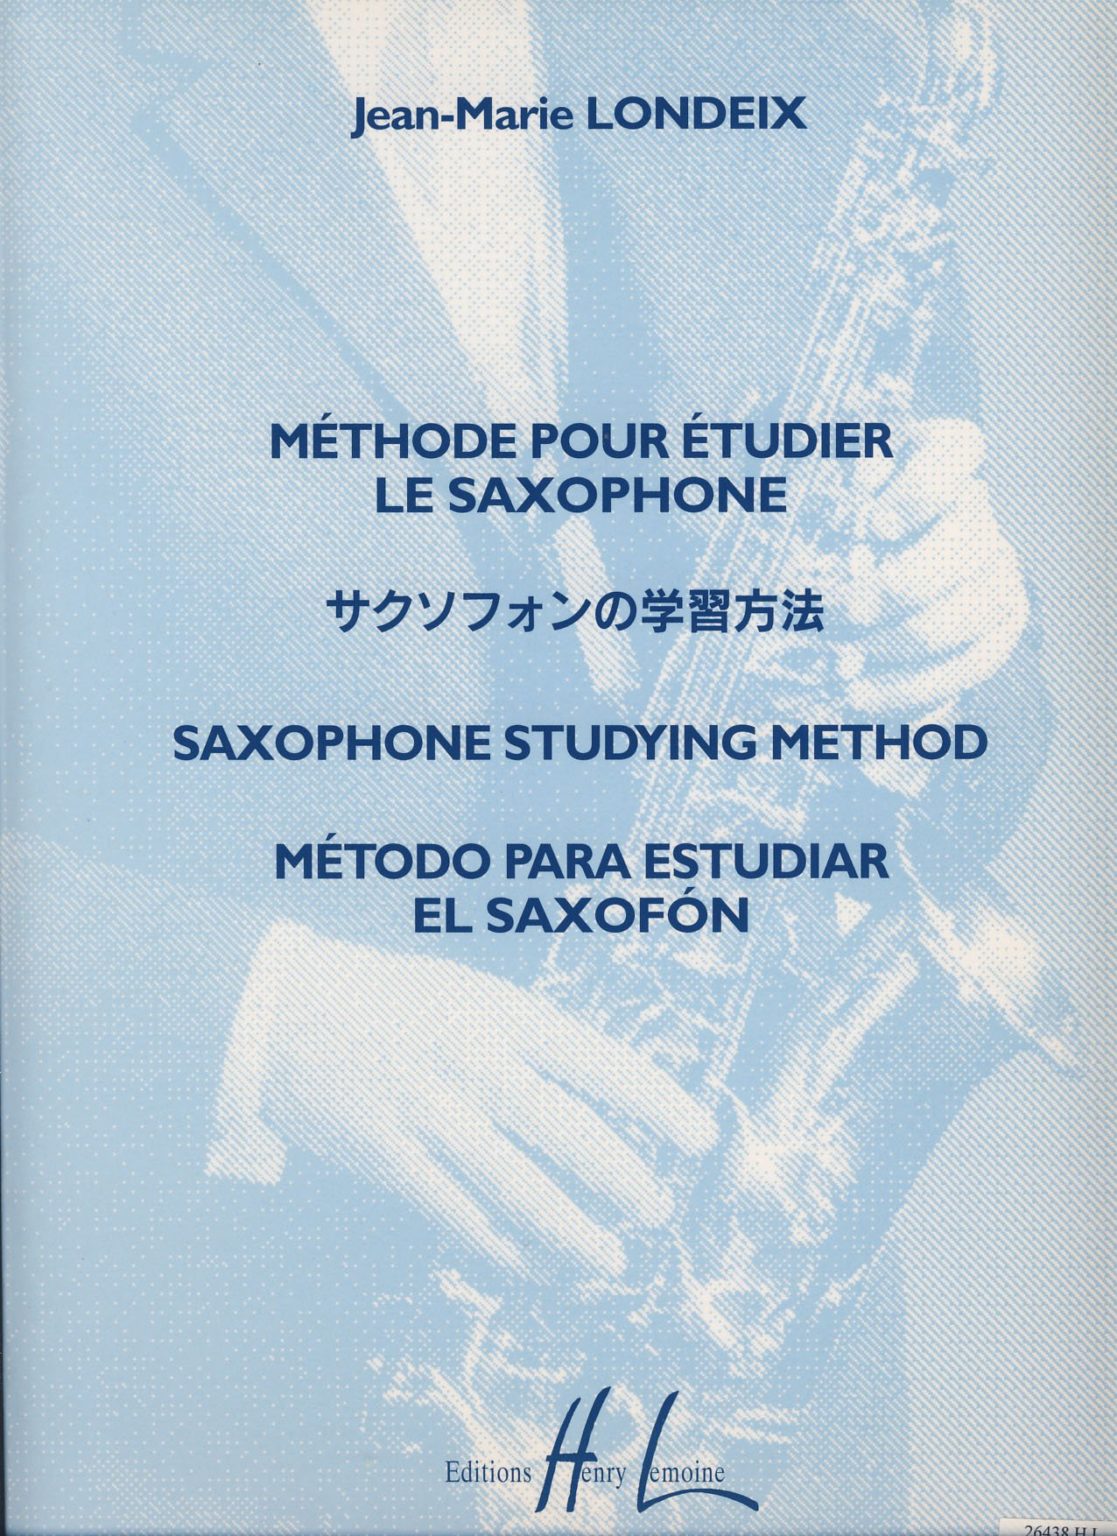 Saxophone Studying Method - Otra forma de estudiar el saxofón. Jean-Marie Londeix